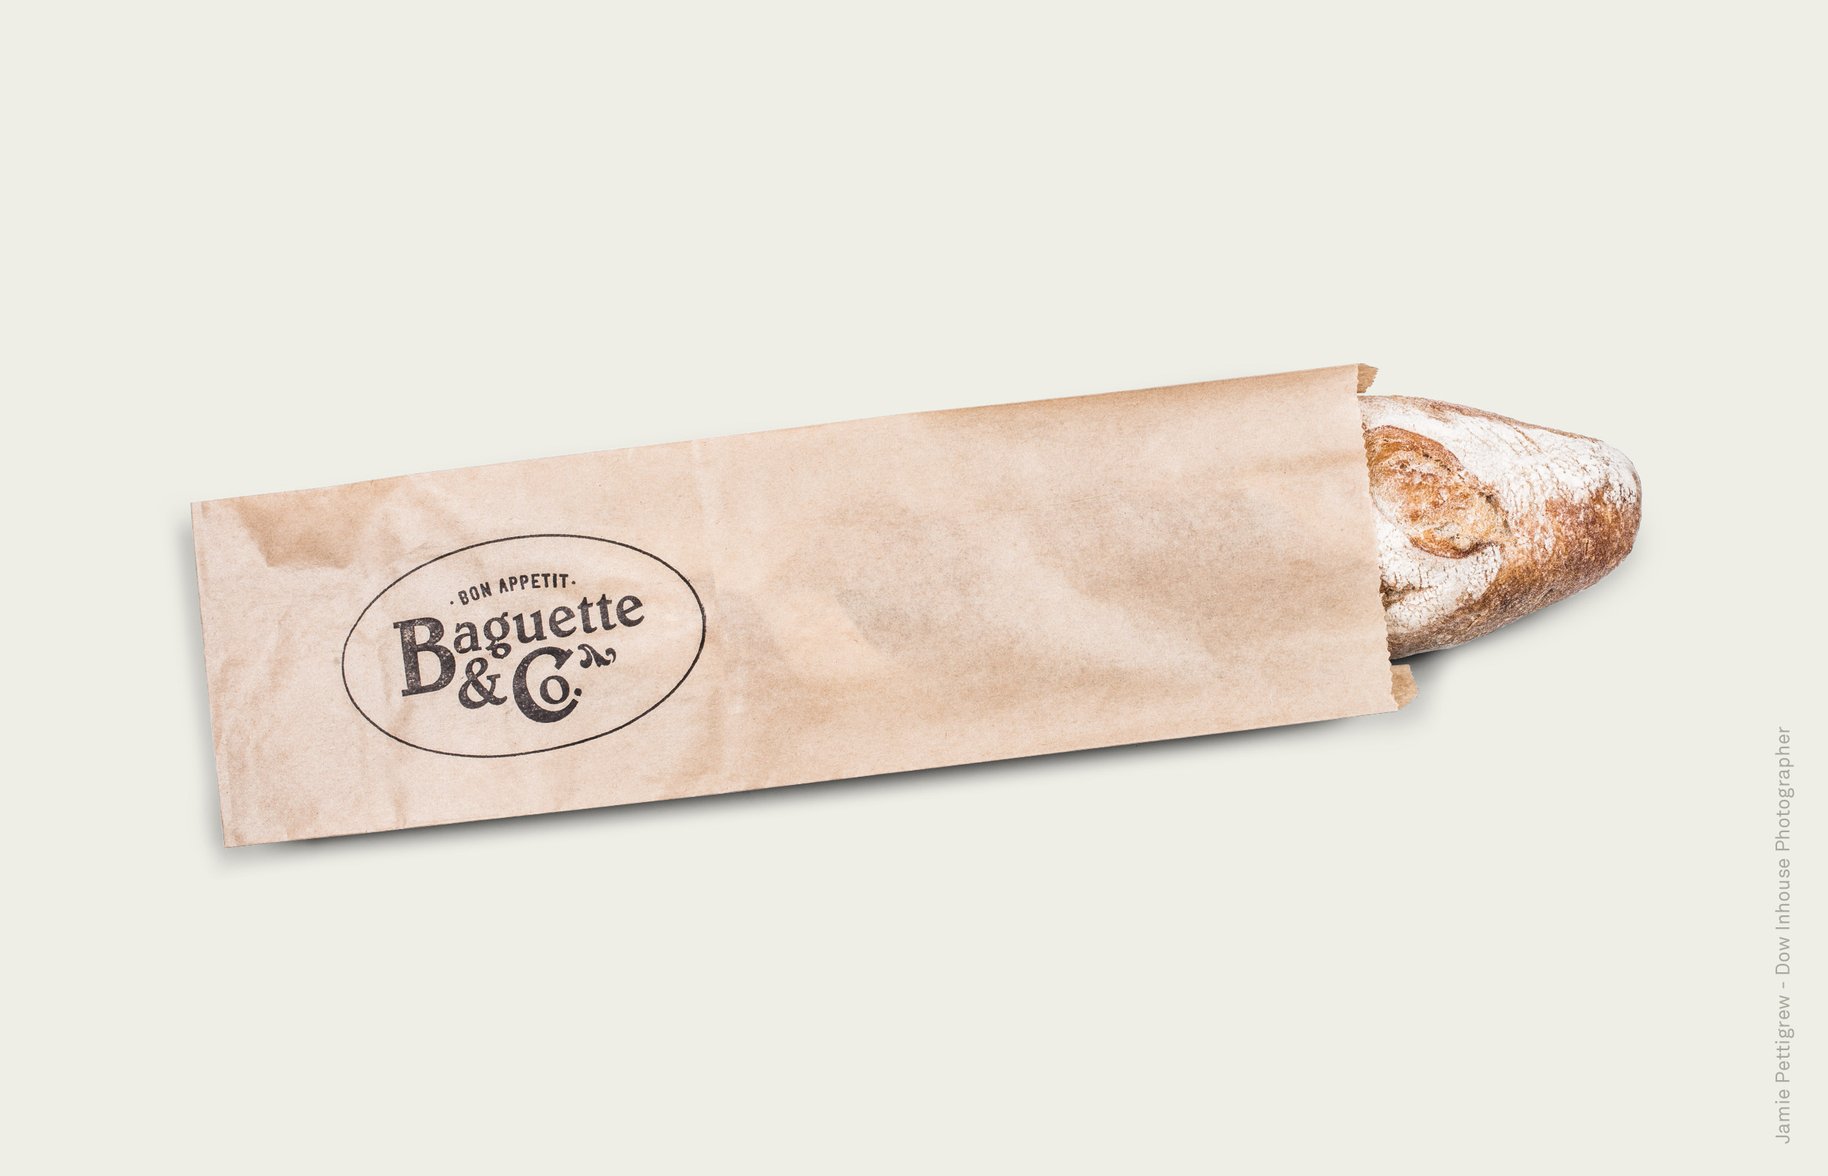 Baguette & Co logo on paper baguette bag